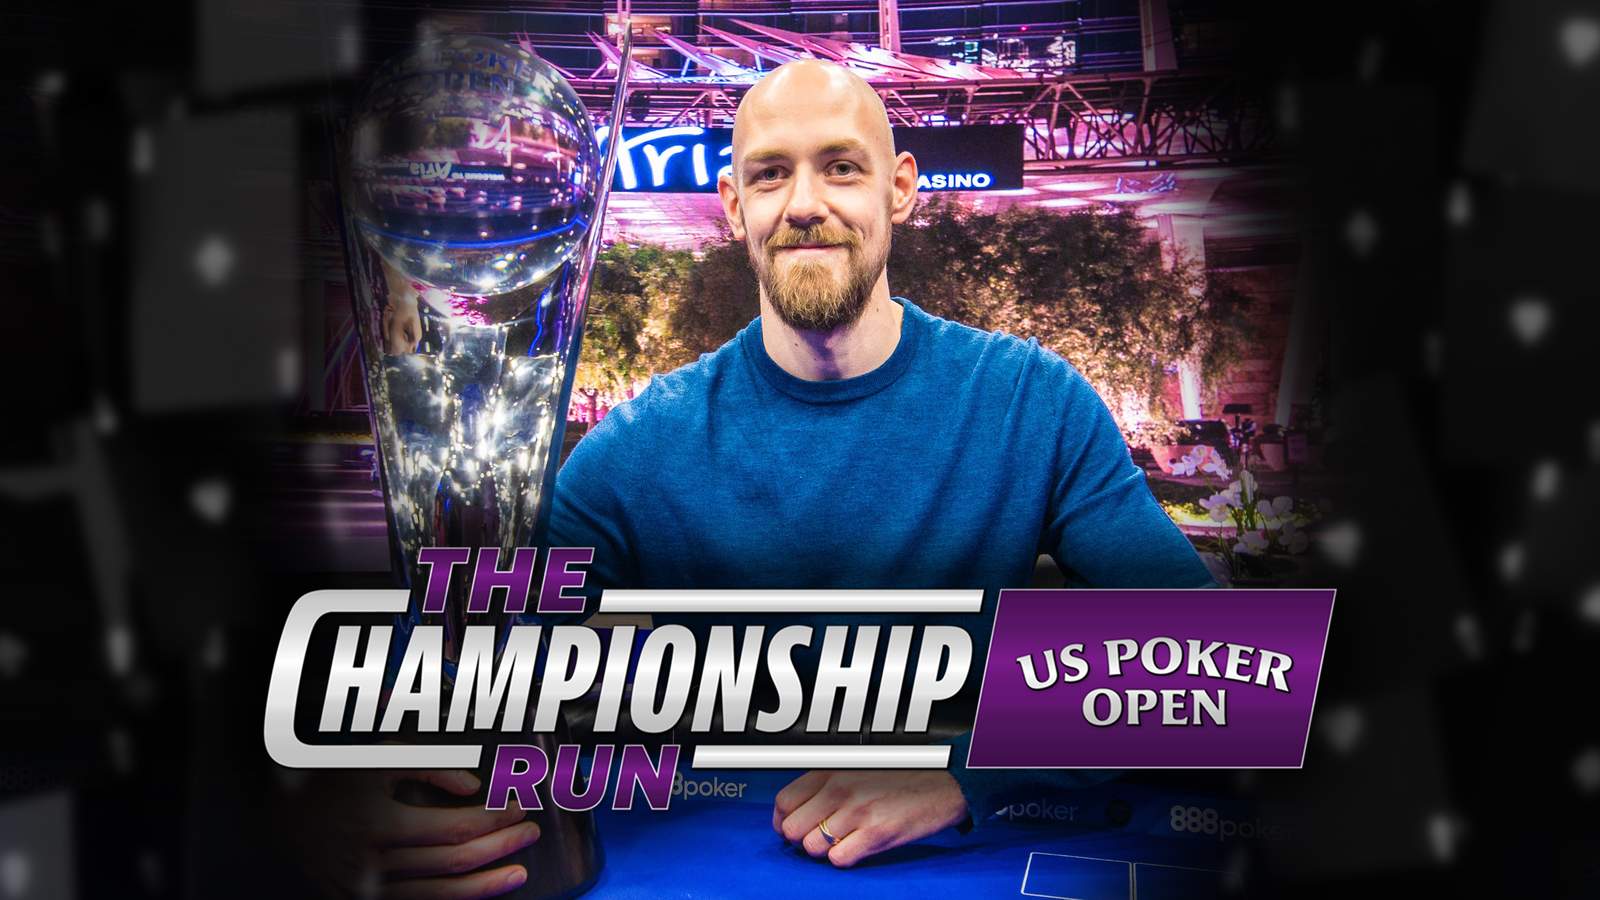 Watch The Championship Run: U.S. Poker Open | Stephen Chidwick on PokerGO Now!